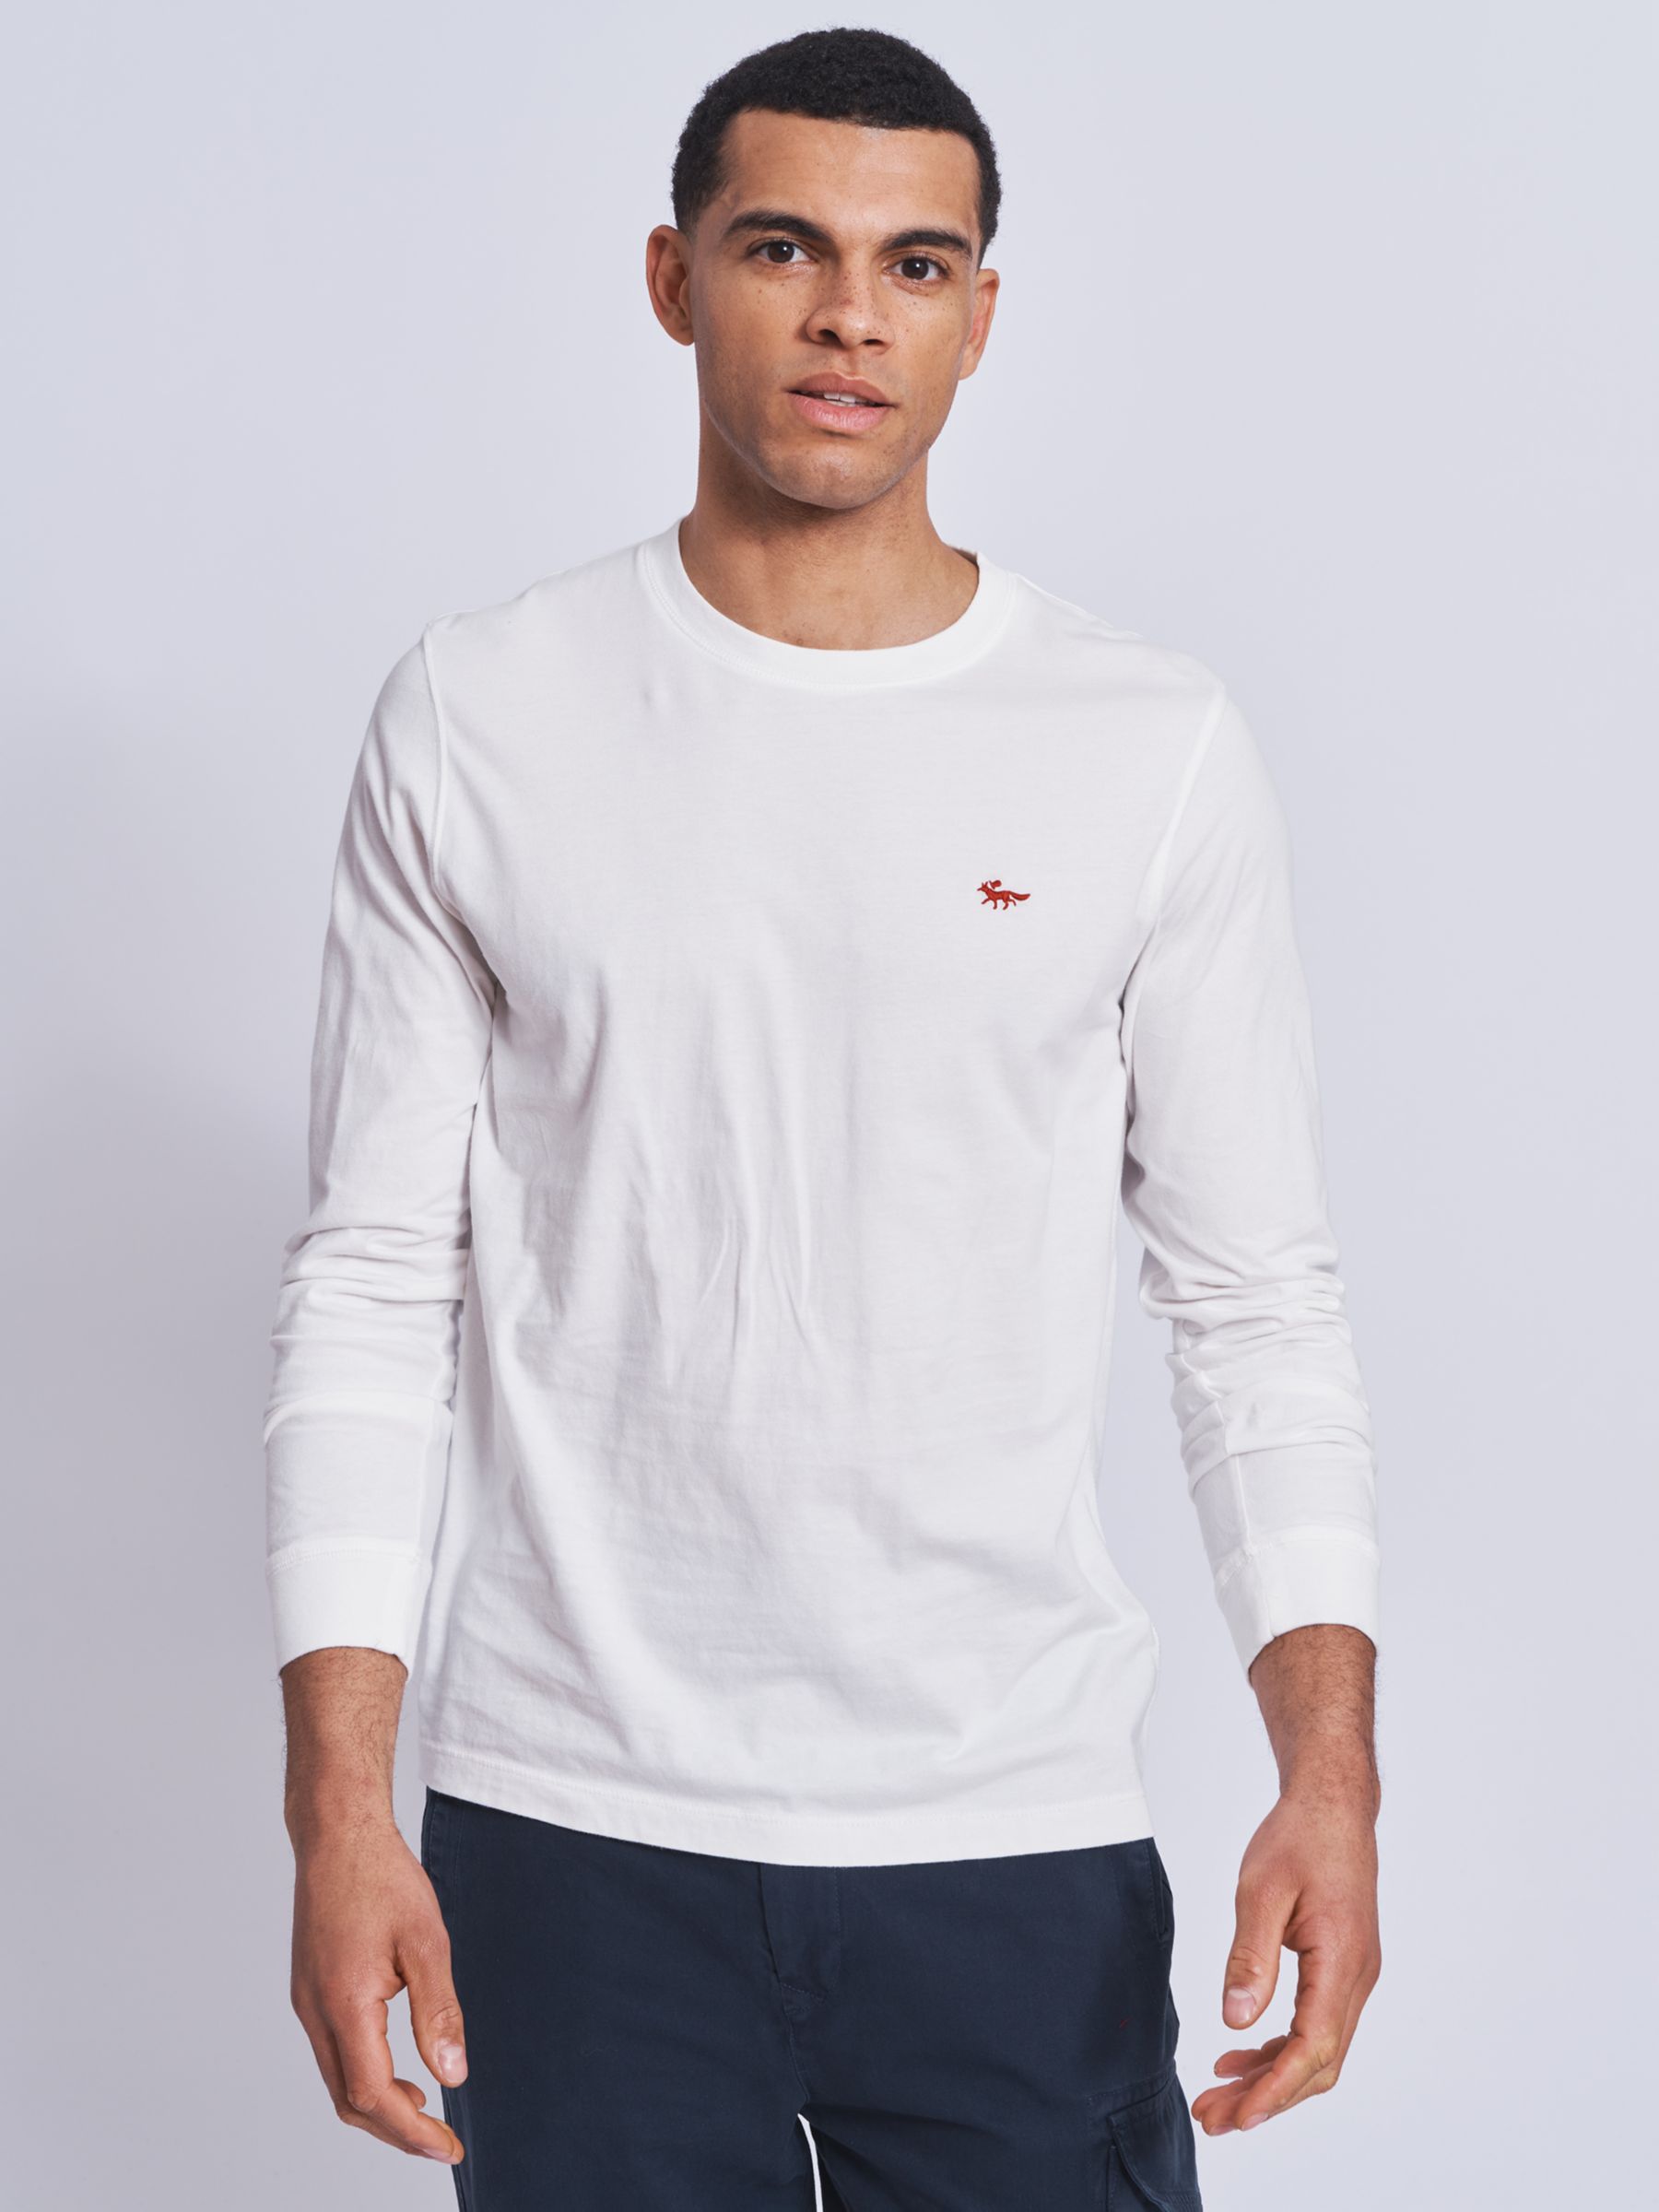 Aubin Buttermere Long Sleeve Cotton Logo T-Shirt, White, S